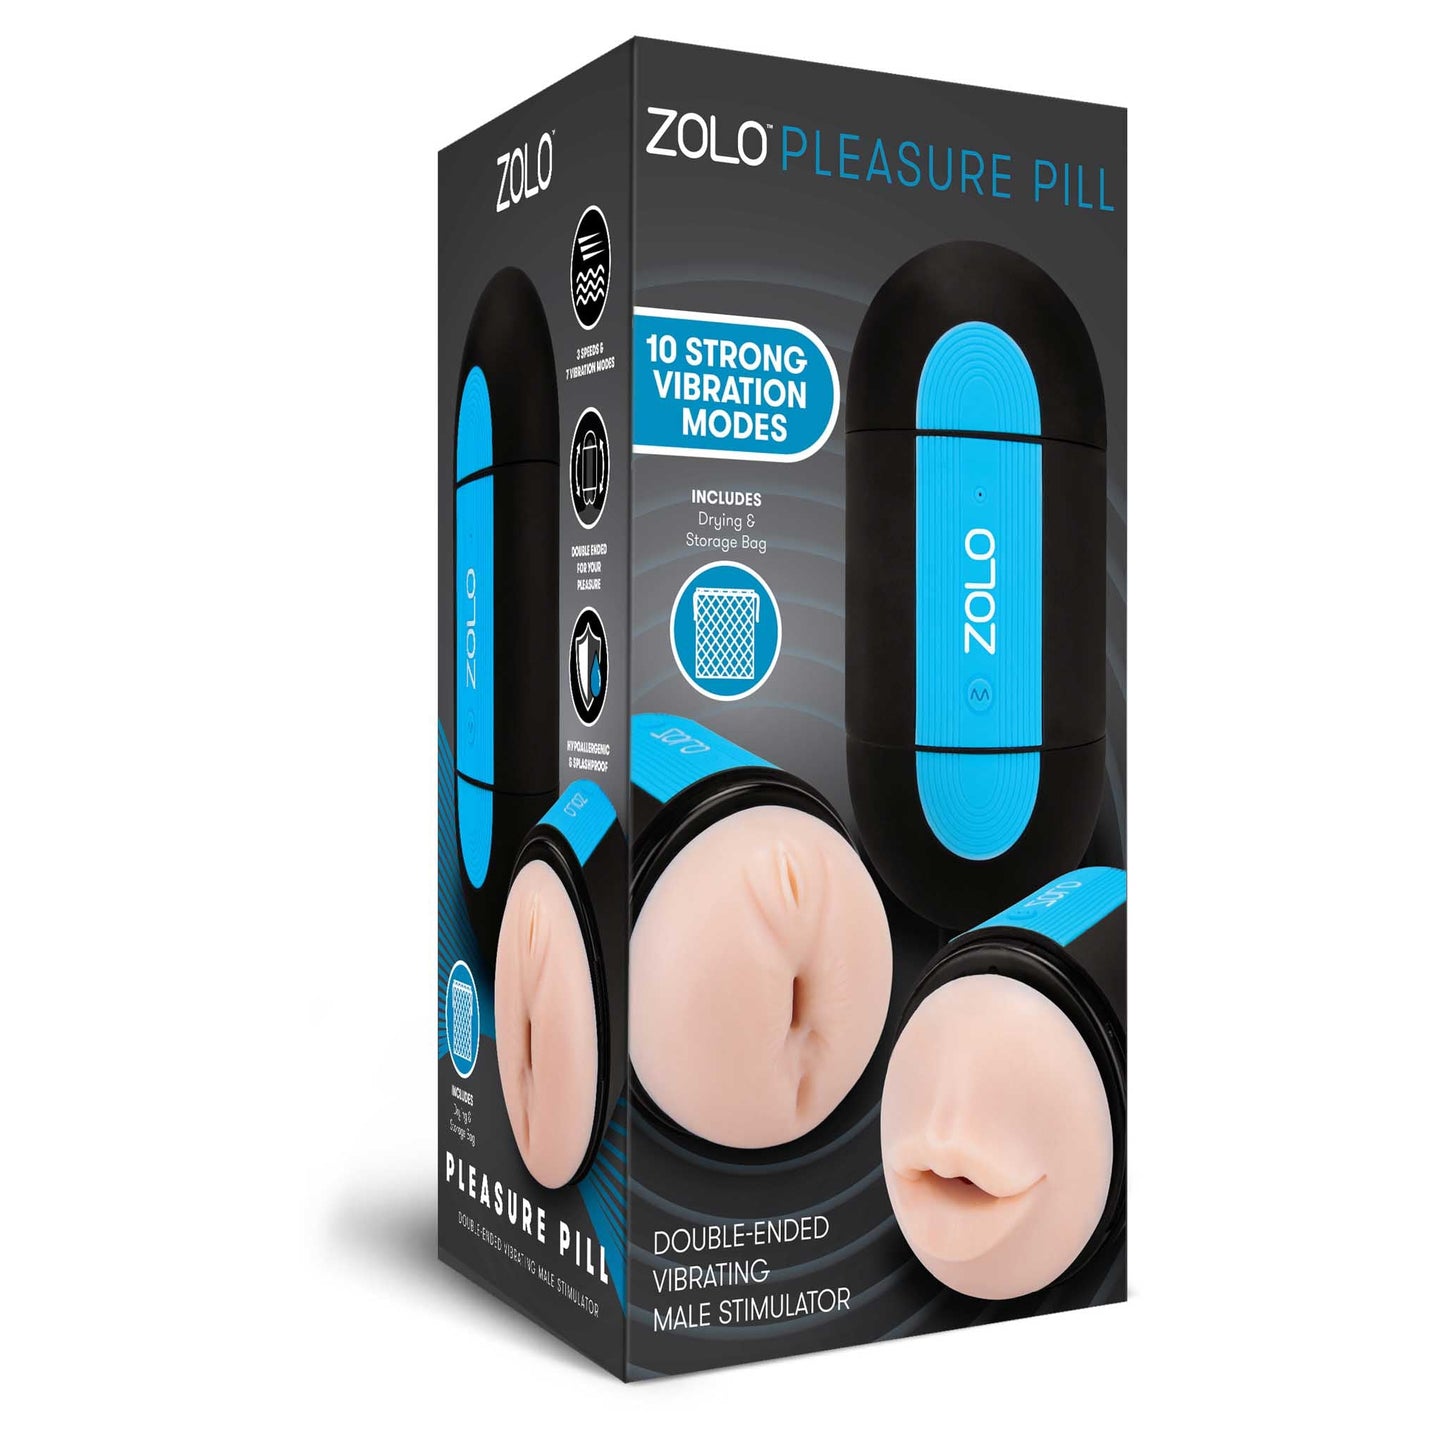 ZOLO Pleasure Pill Double-Ended Vibrating Male Stimulator